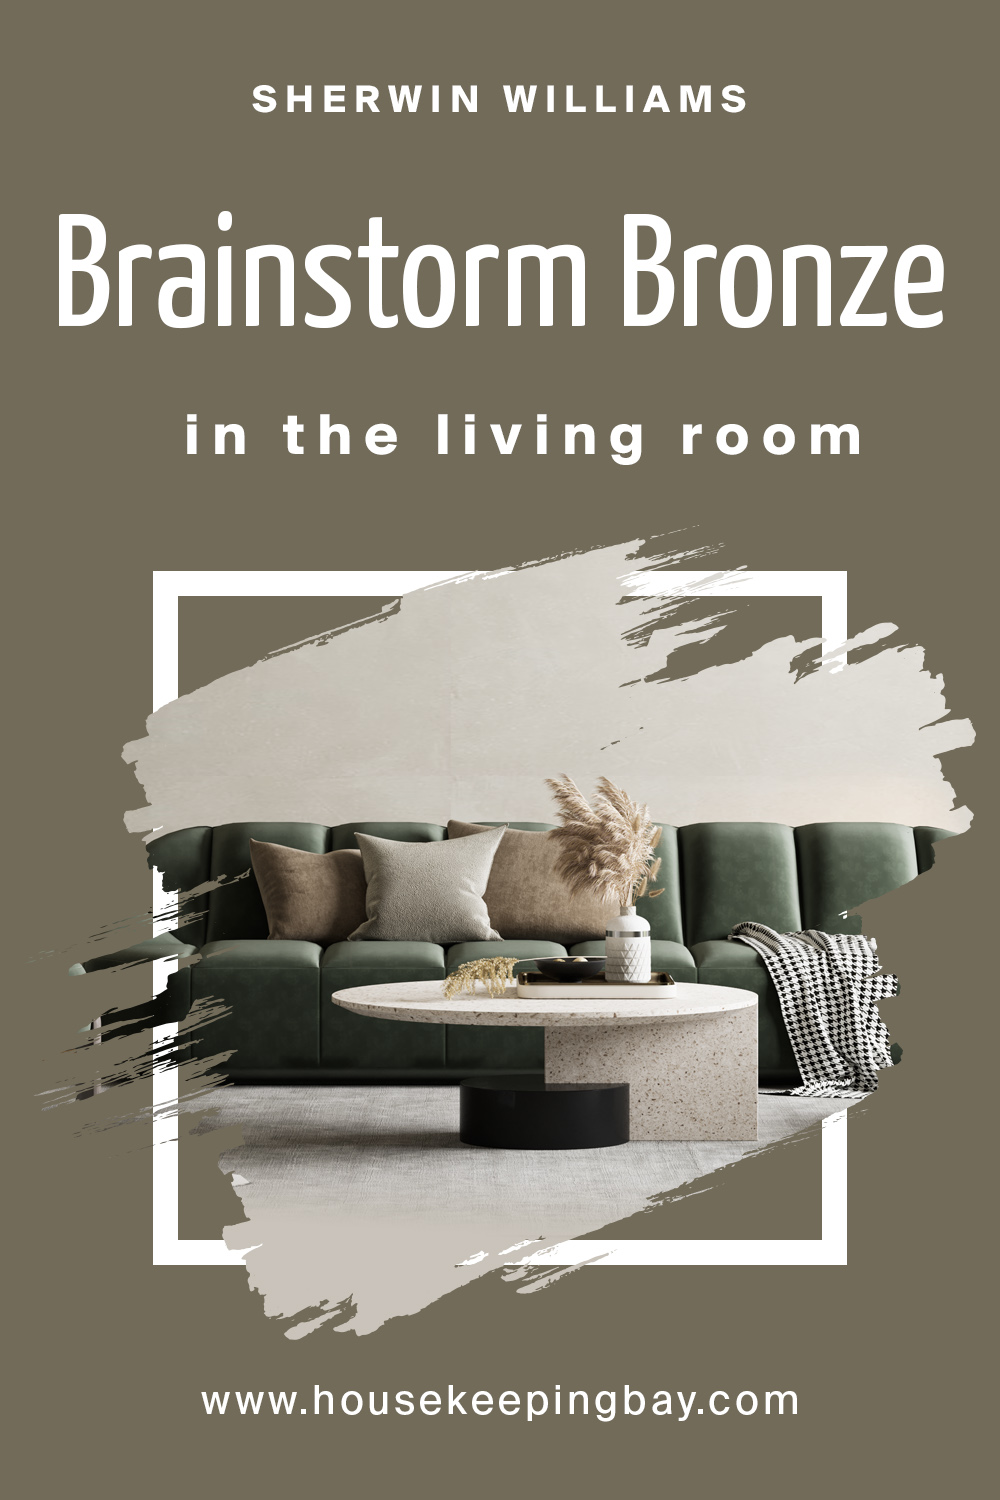 Brainstorm Bronze in the living room